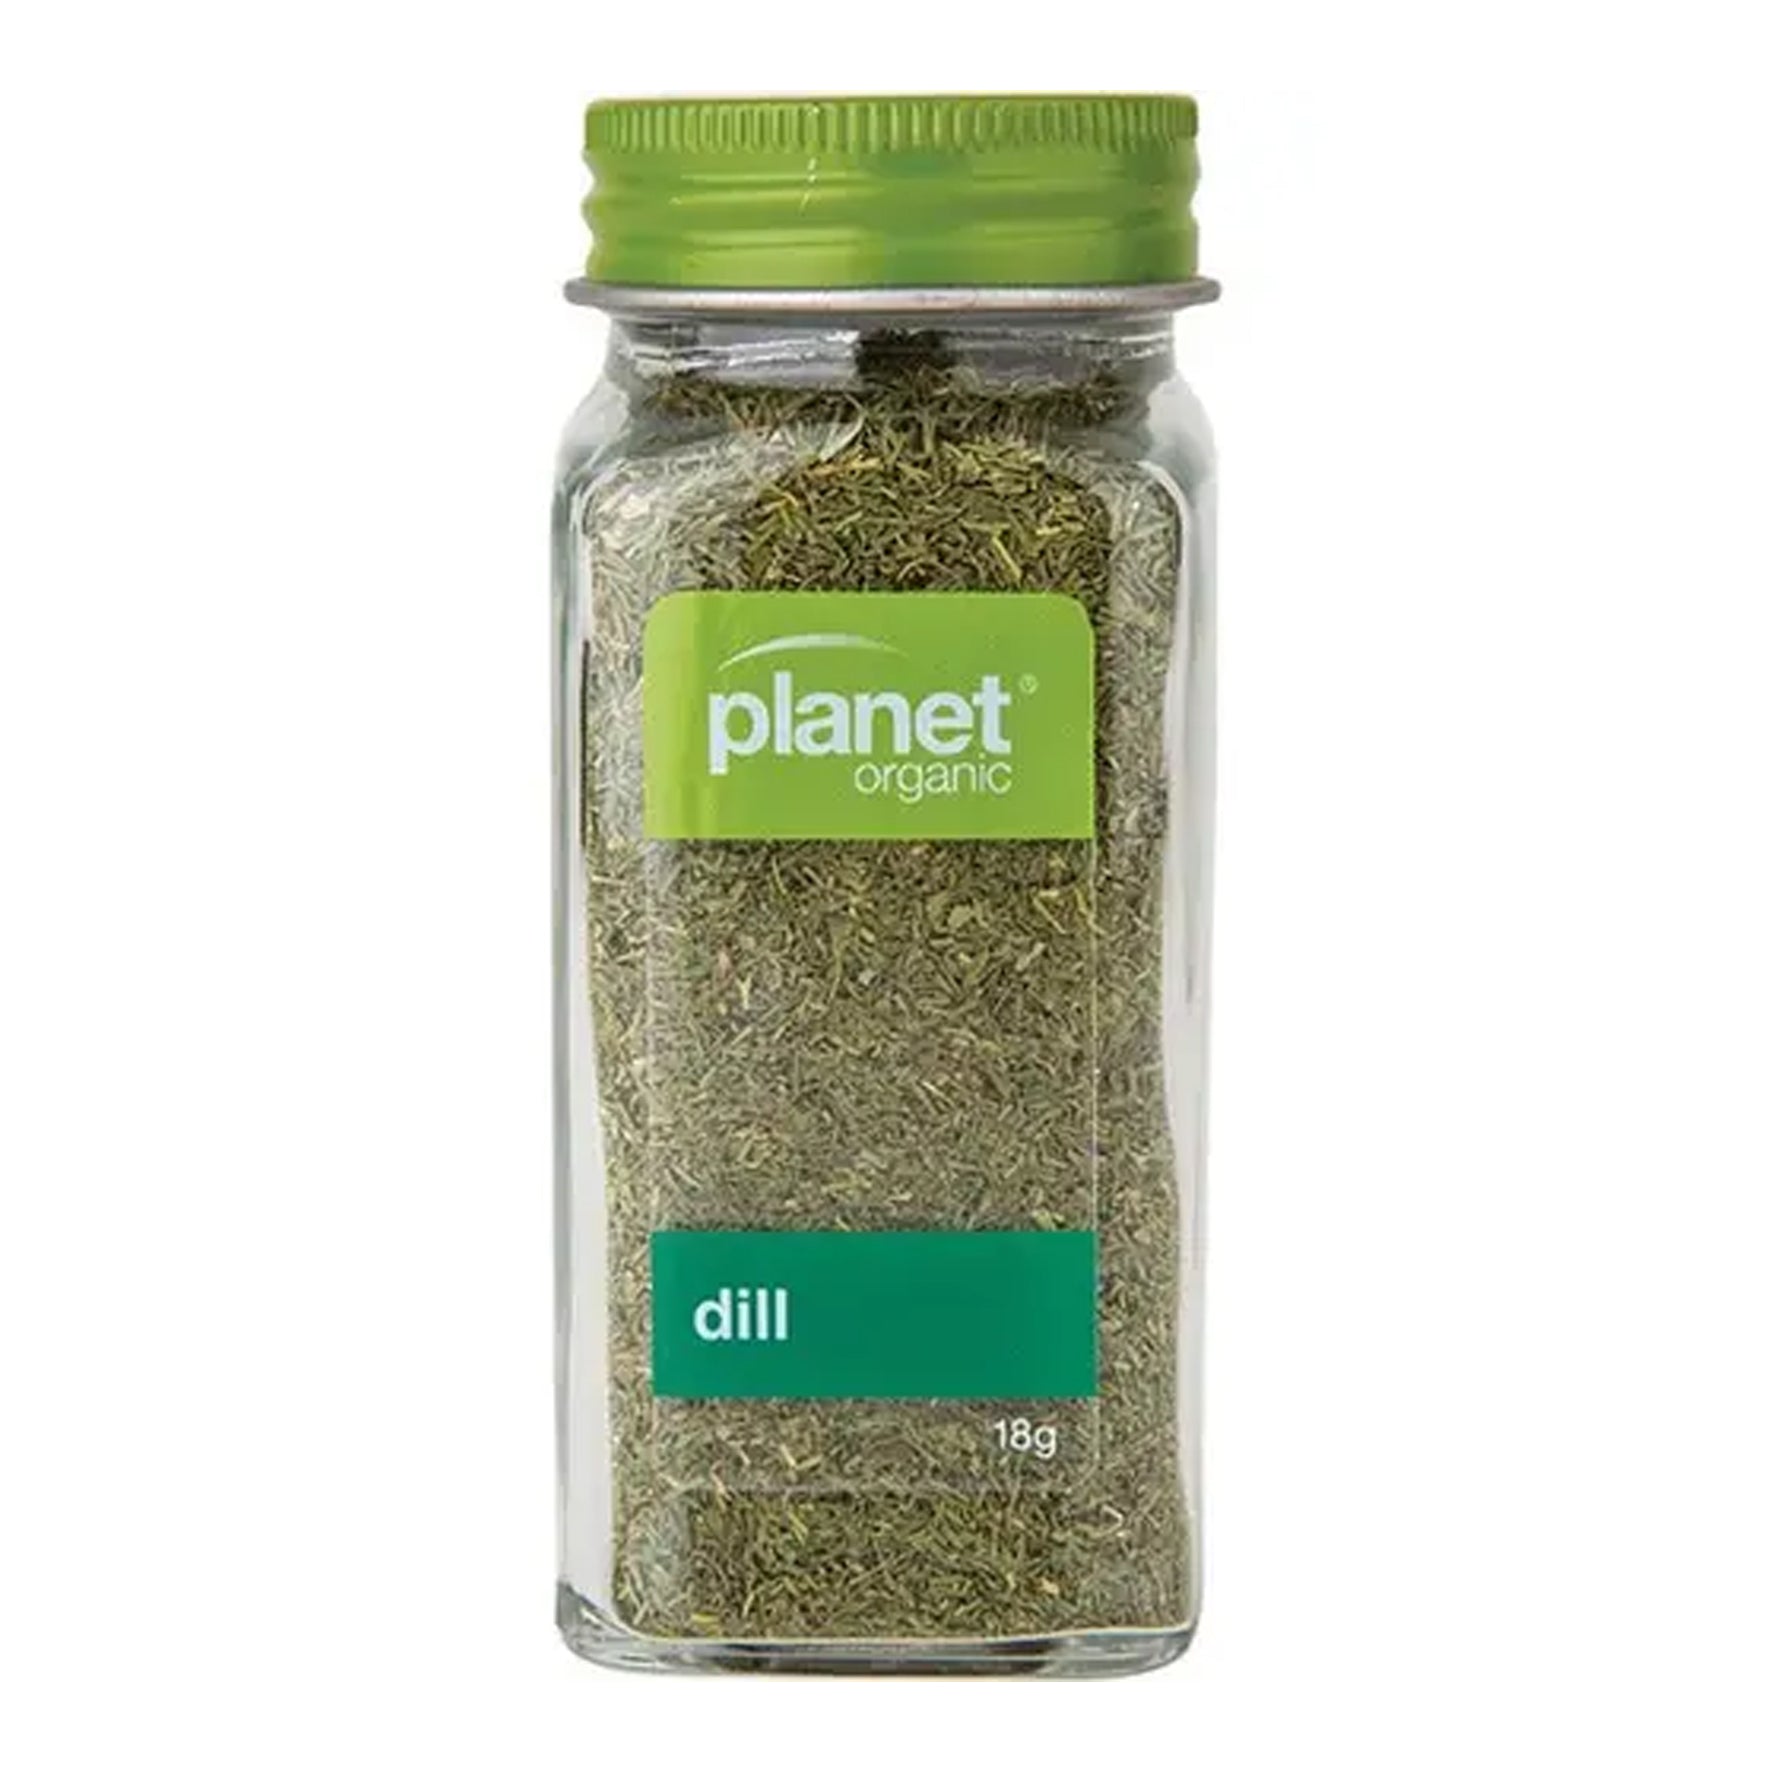 Planet Organic Herbs - DIll 18g